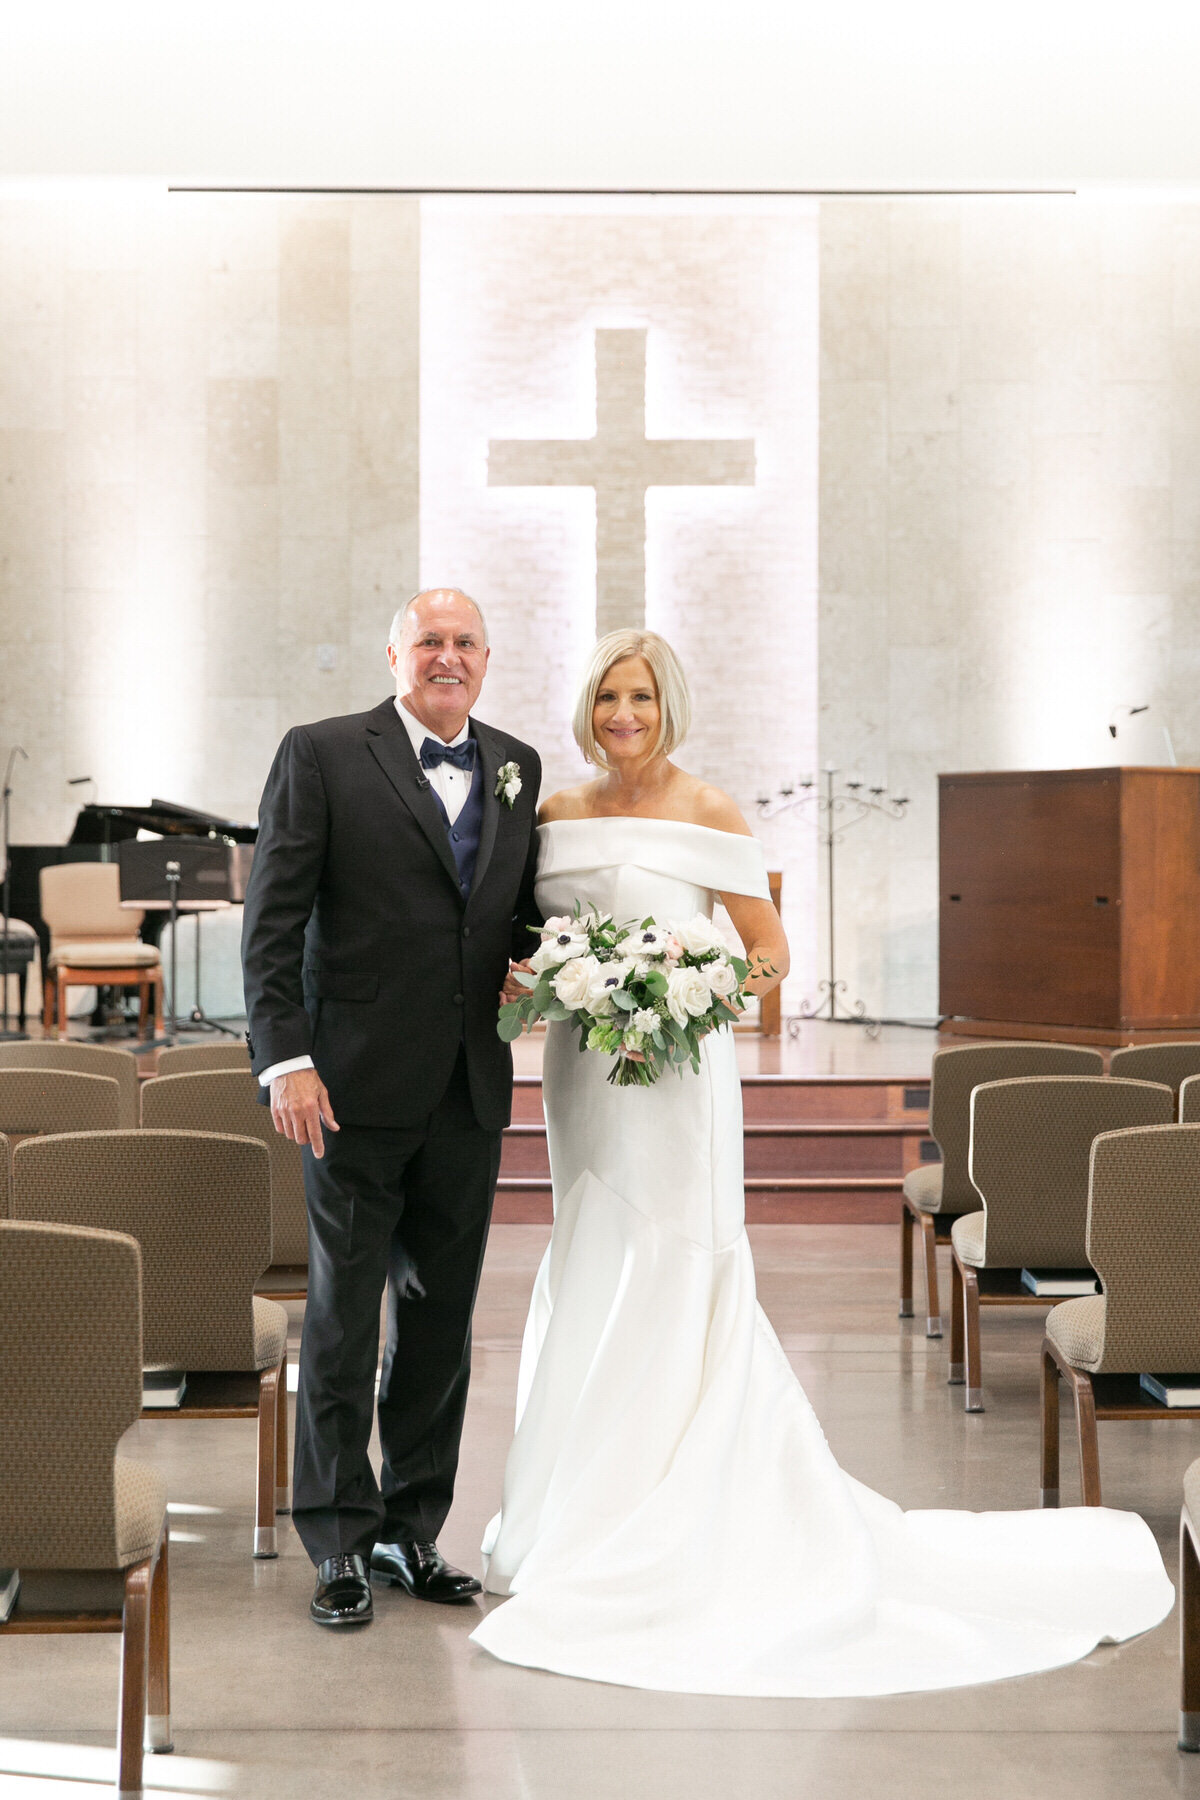 Karlie Colleen Photography - El Chorro Wedding - Scottsdale Bible Church - Brigita & Nevile -27